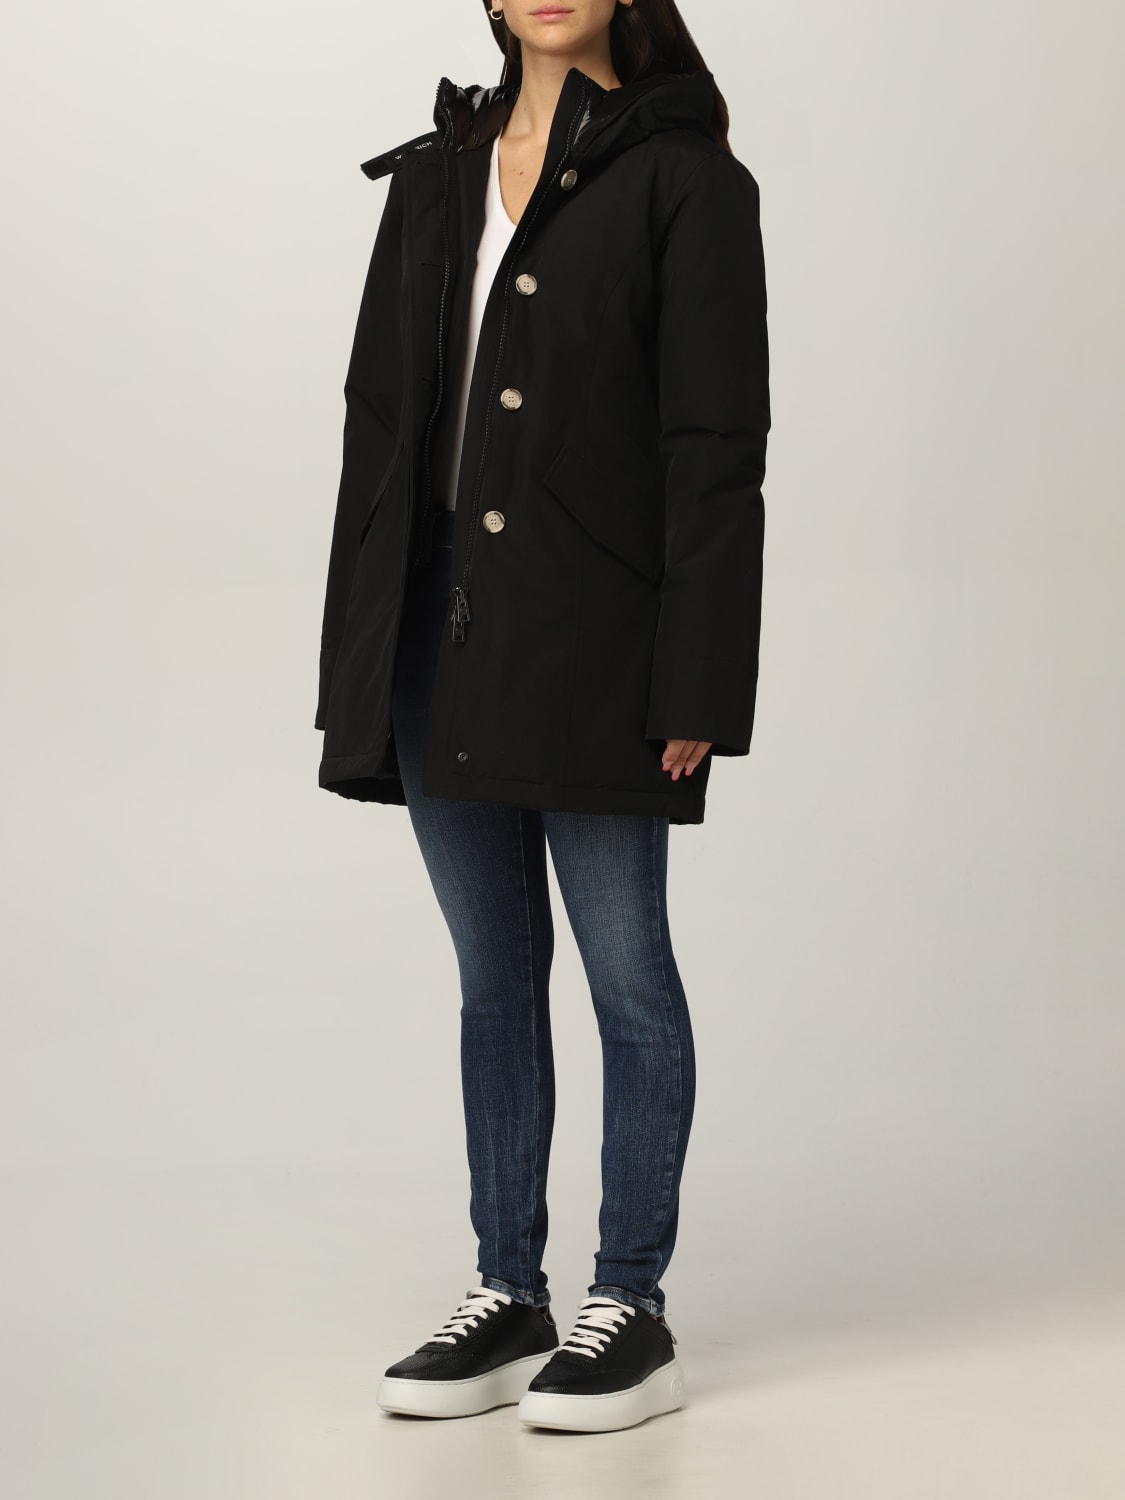 Woolrich Outlet: jacket woman - Black | Woolrich jacket CFWWOU0580FRUT0001 online on GIGLIO.COM